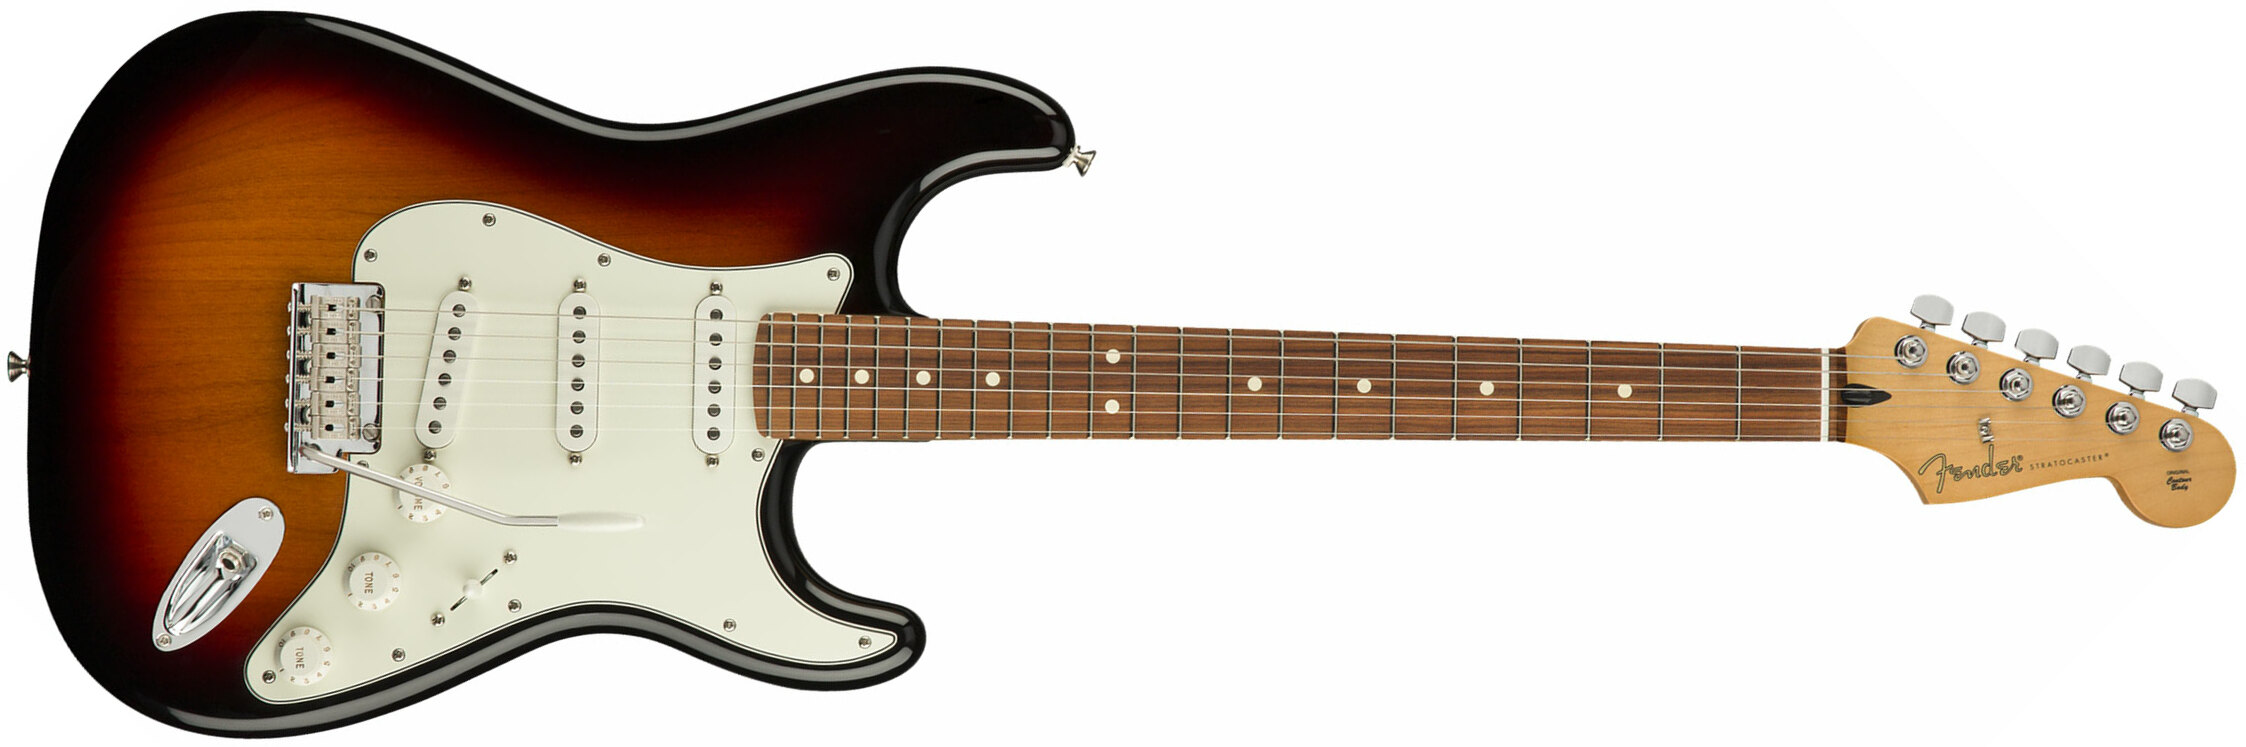 Fender Strat Player Mex Sss Pf - 3-color Sunburst - Str shape electric guitar - Main picture